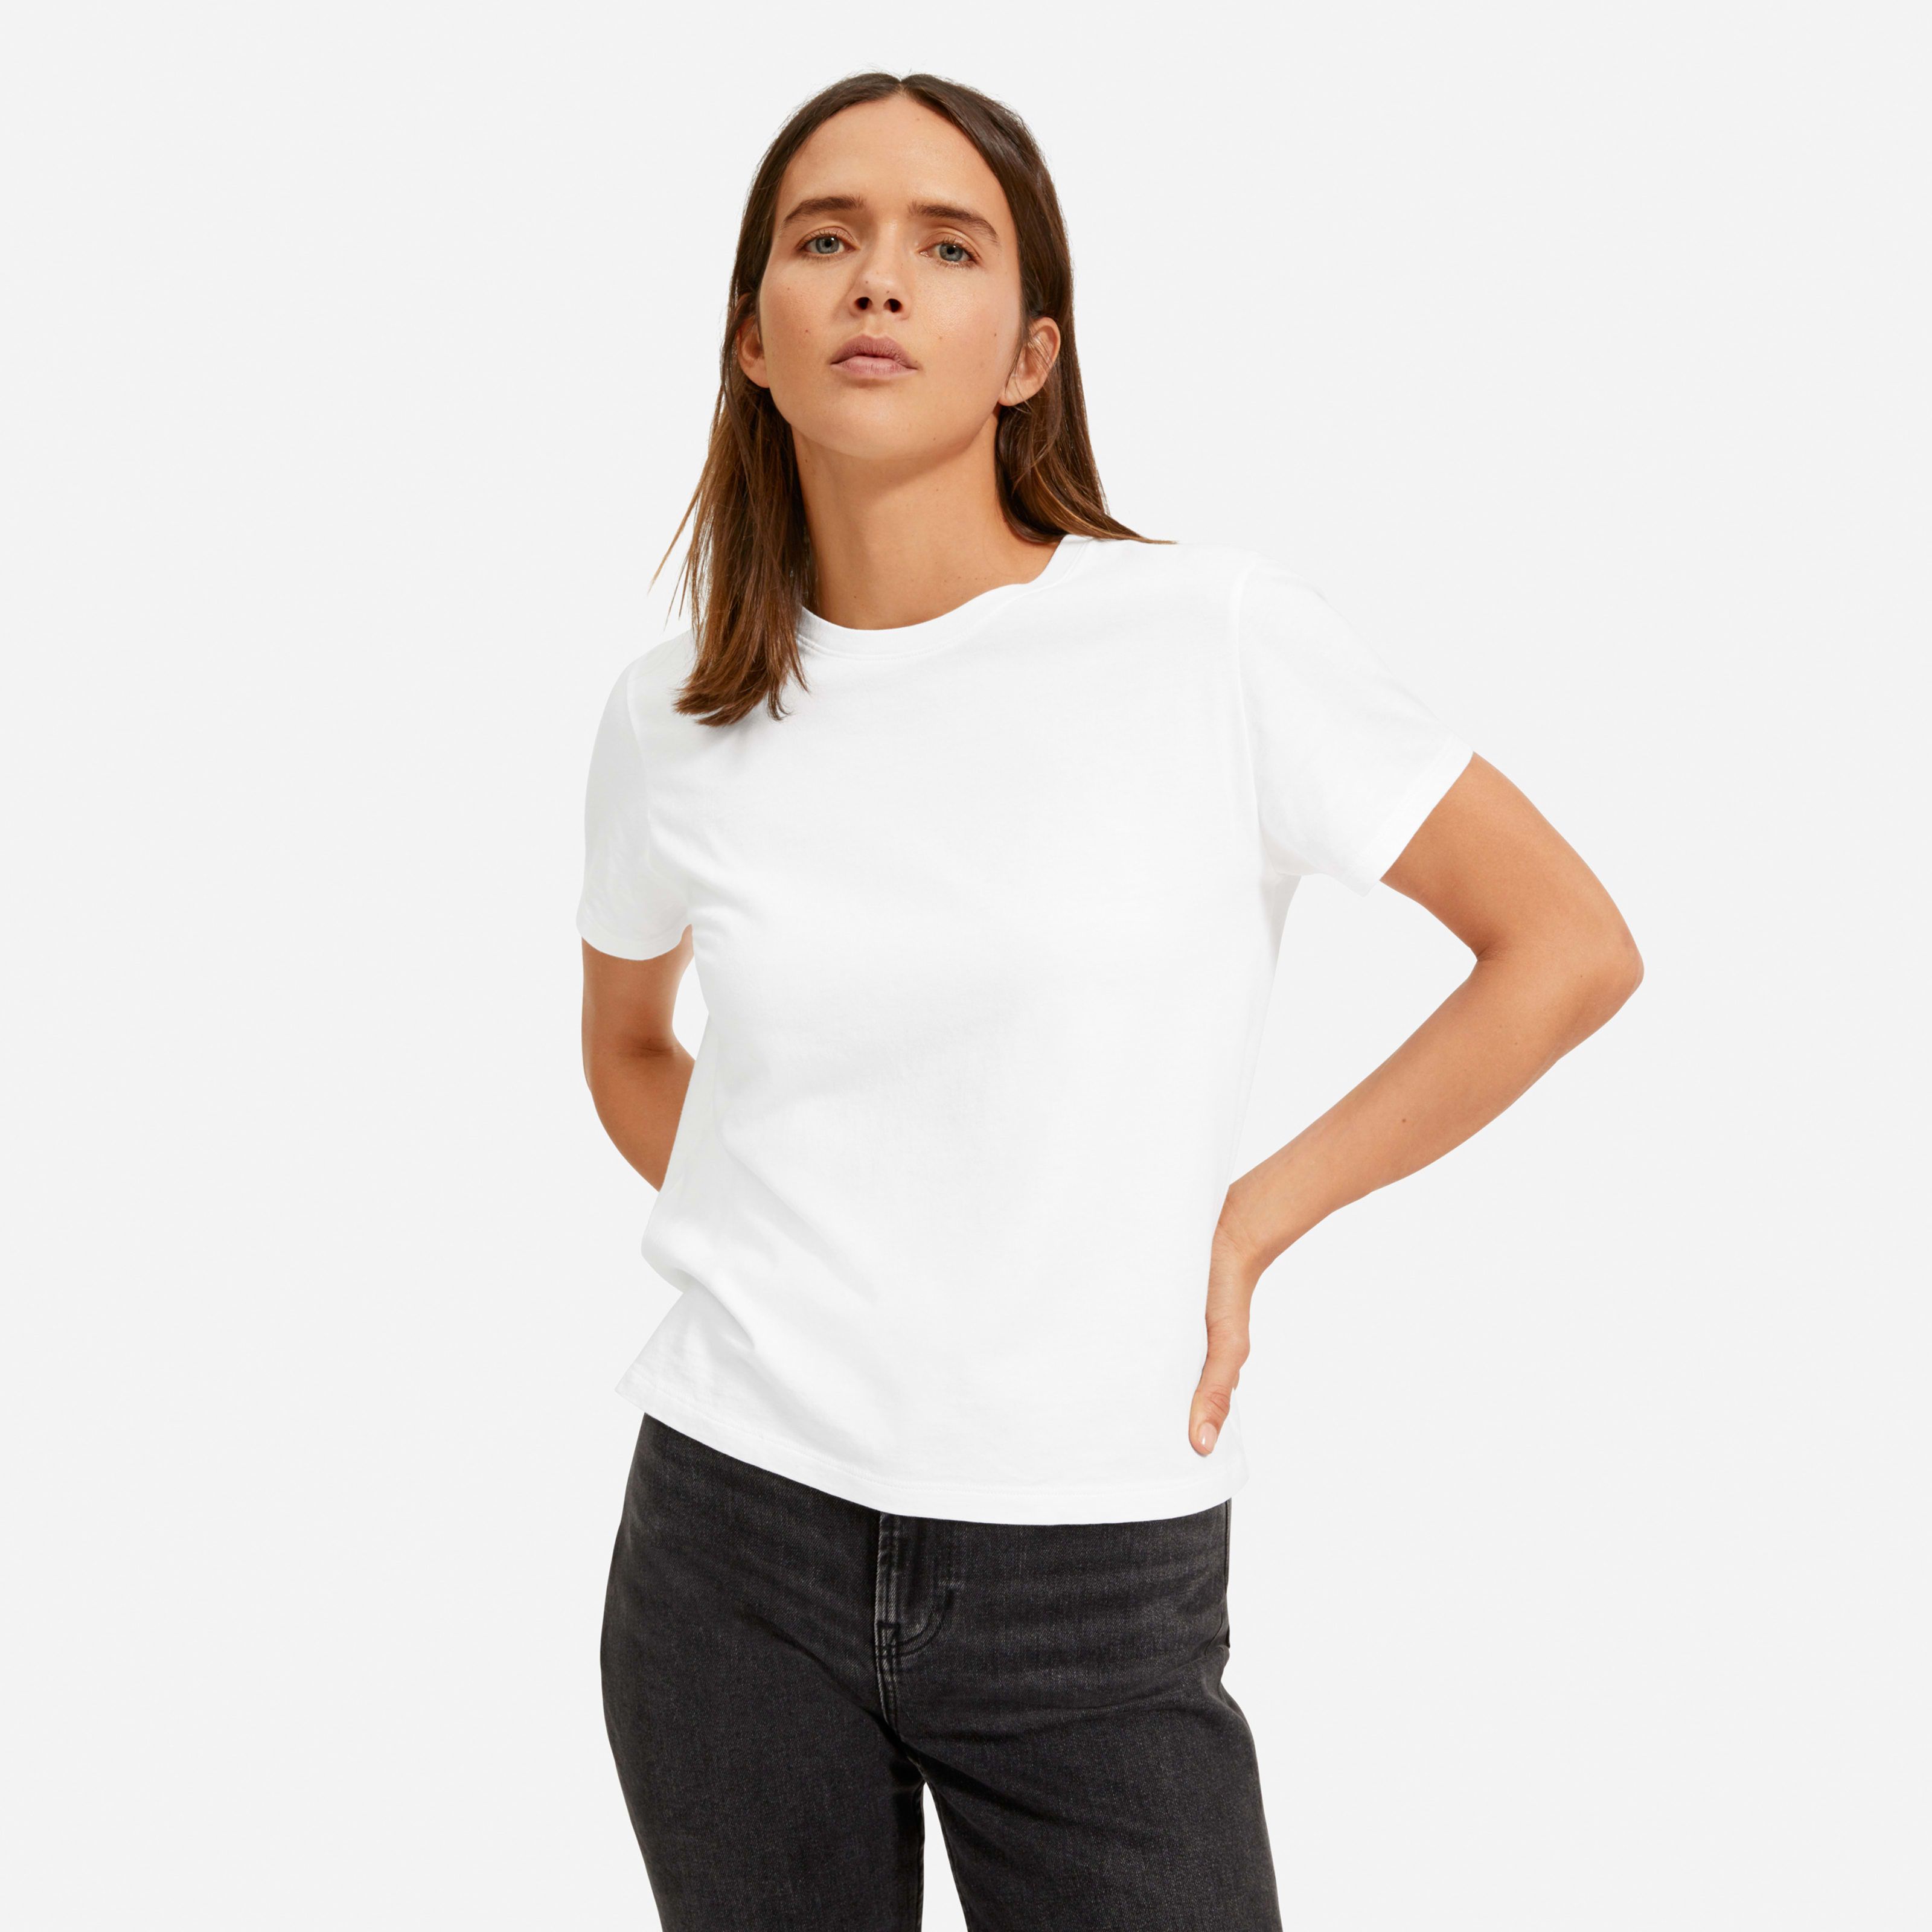 Women's Organic Cotton Box-Cut T-Shirt by Everlane in White, Size XXXL | Everlane